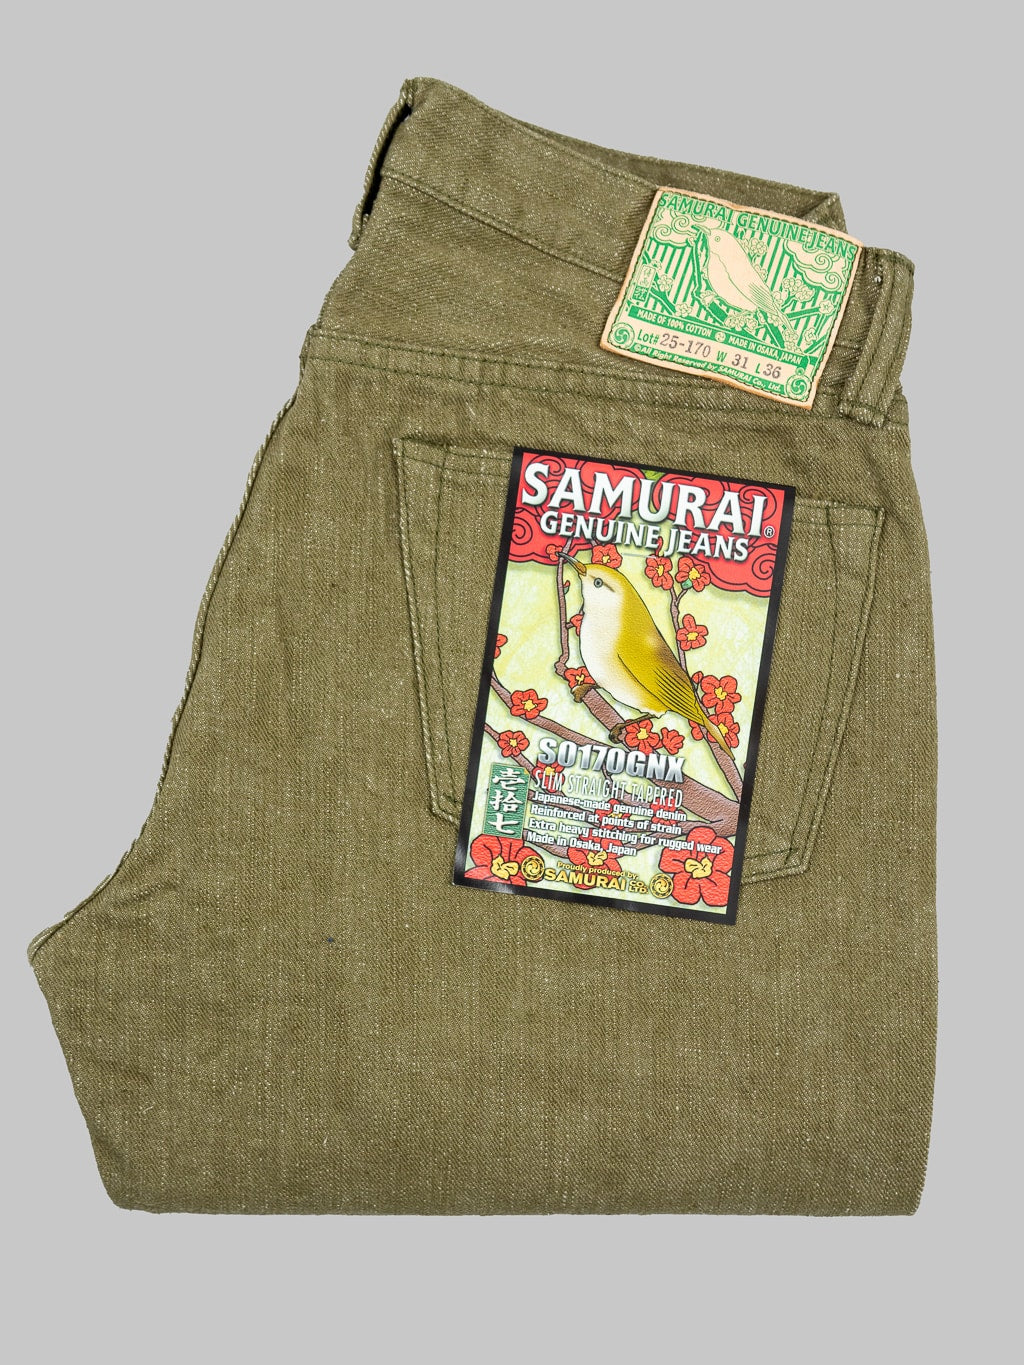 Samurai Jeans S0170GNX "Uguisu" 17oz Straight Tapered Jeans